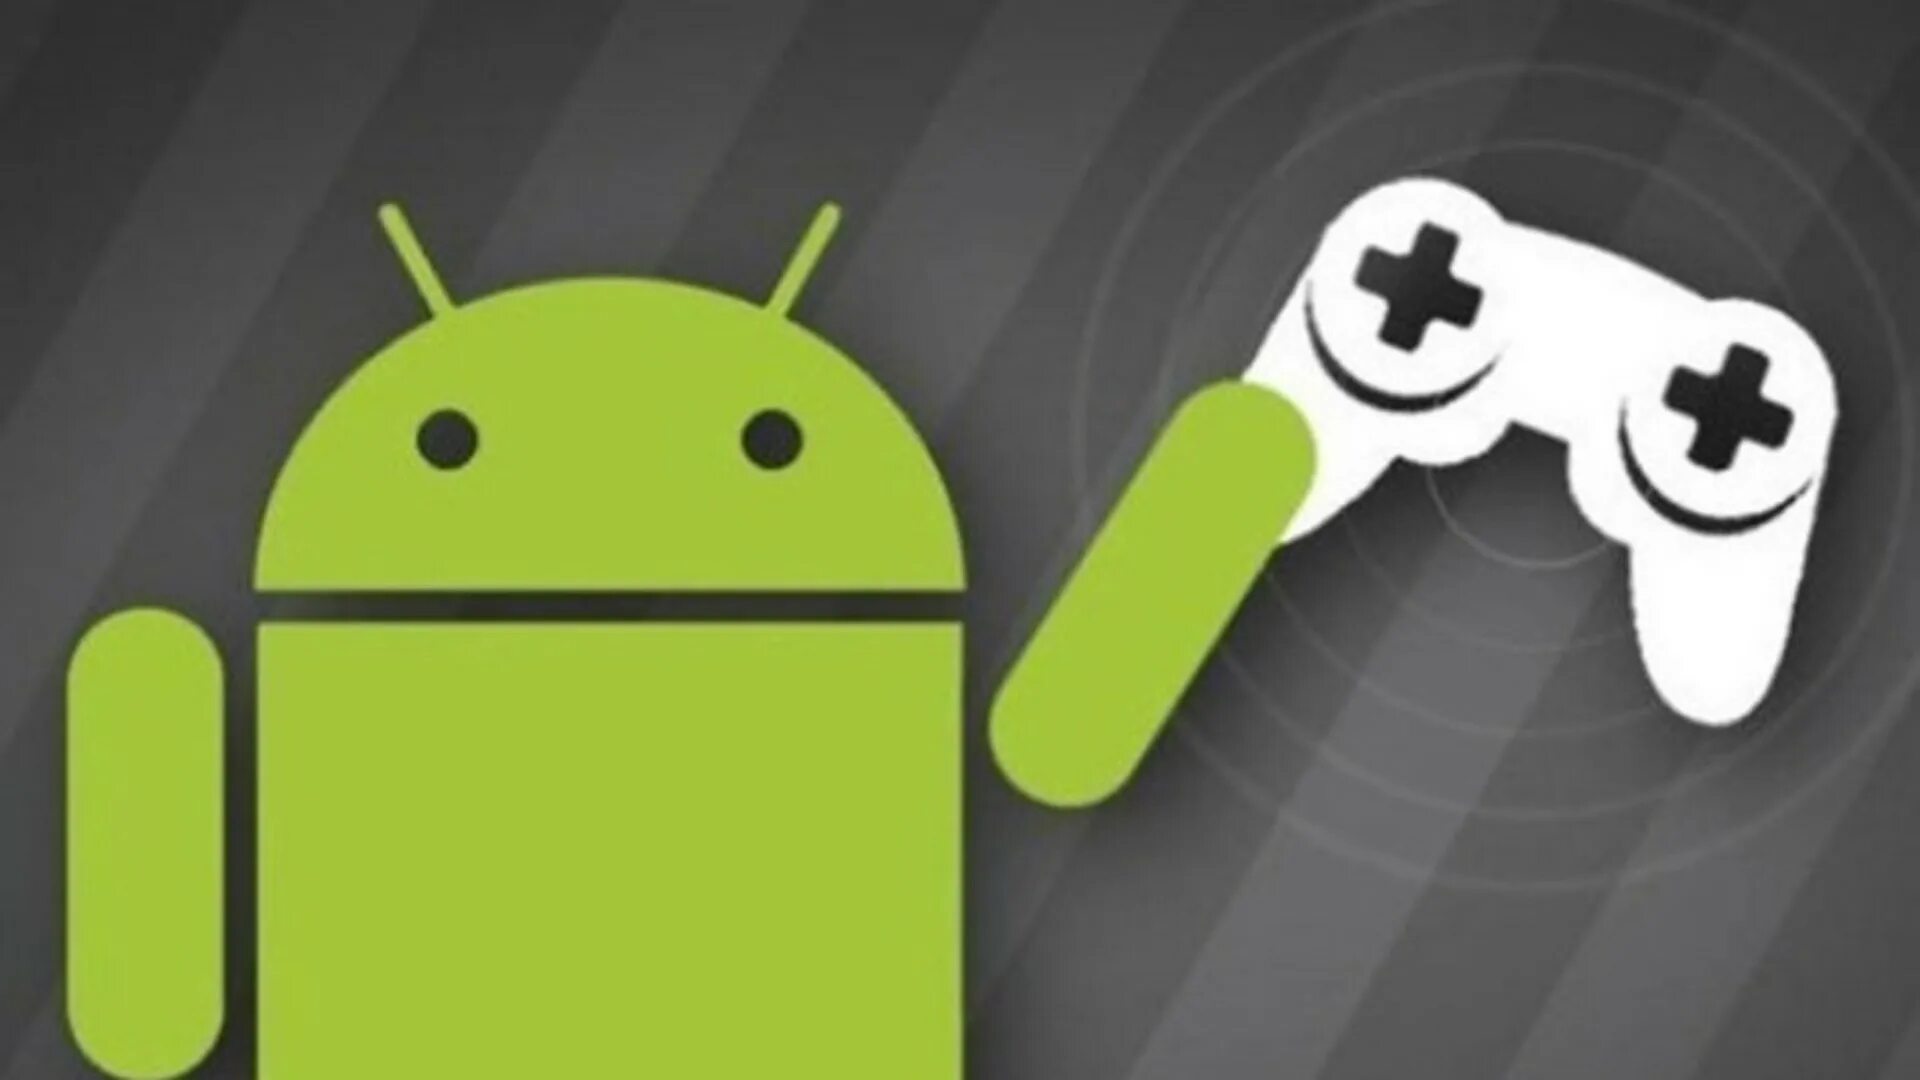 Android igra. Андроид. Android игры. Игровые Android-приложения. Игры на андроид фото.